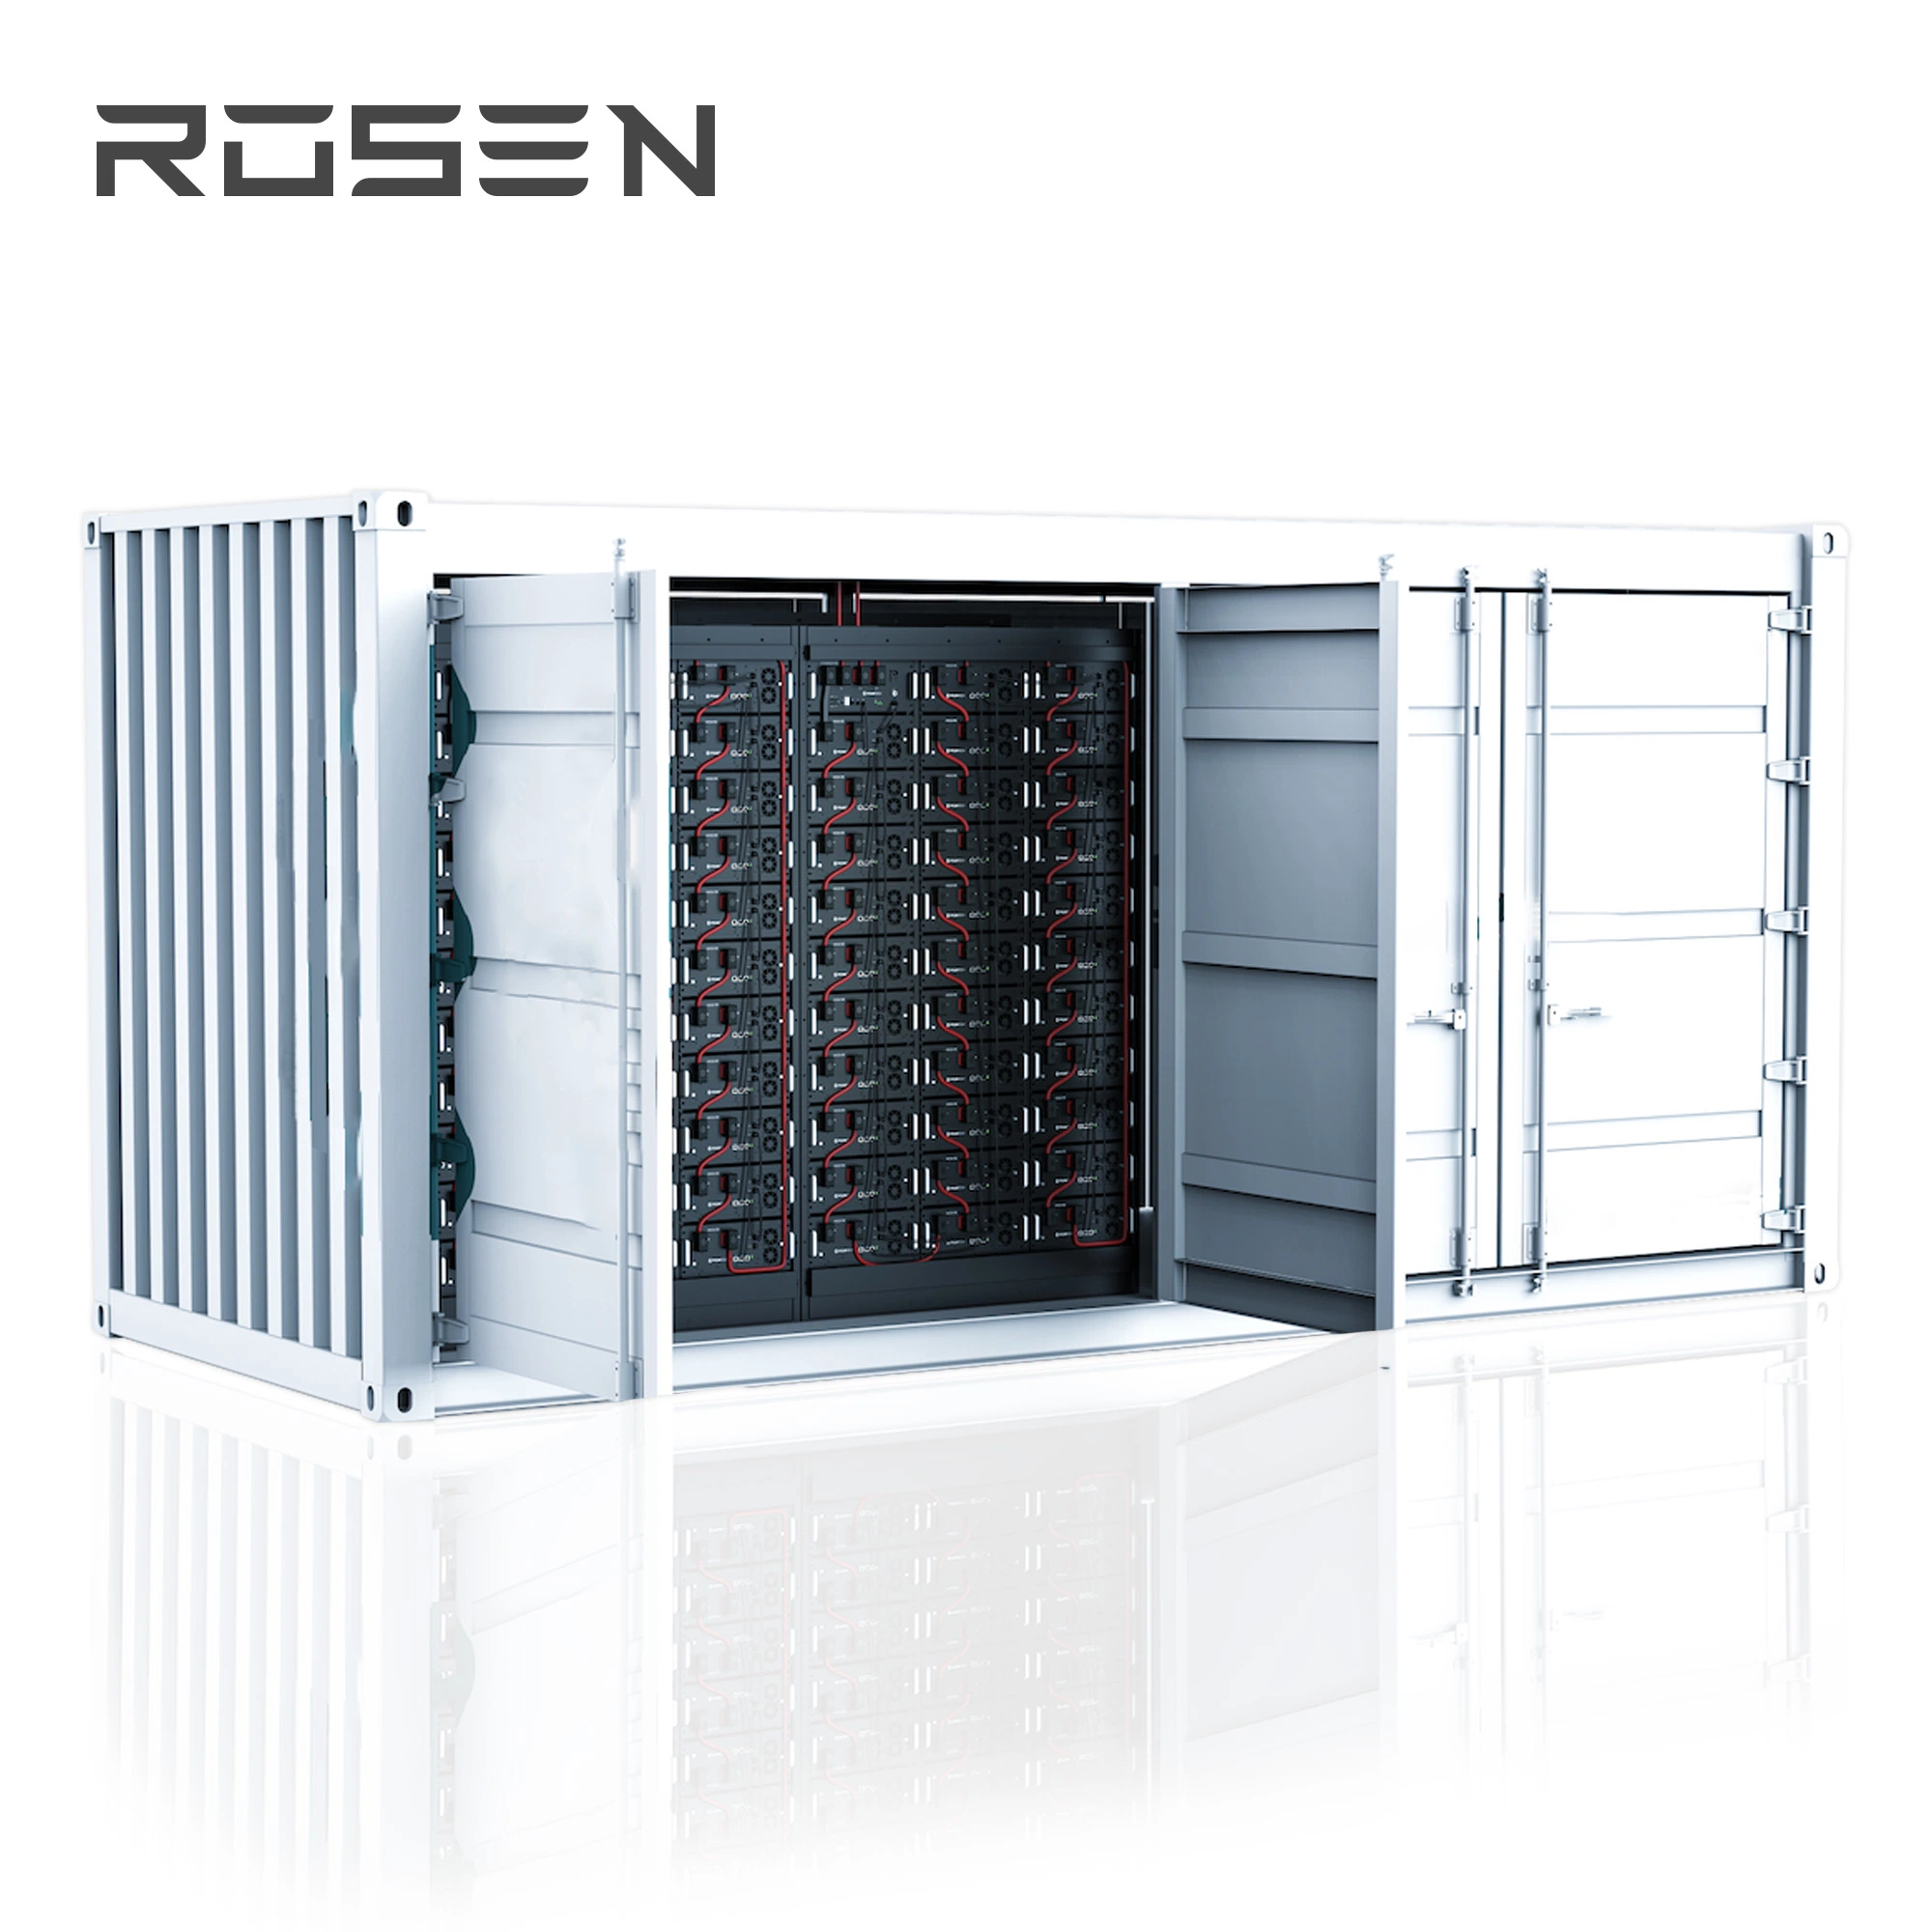 Rosen ESS 100kw Solarpanel-System Lithium Batterie Energie Lagerung